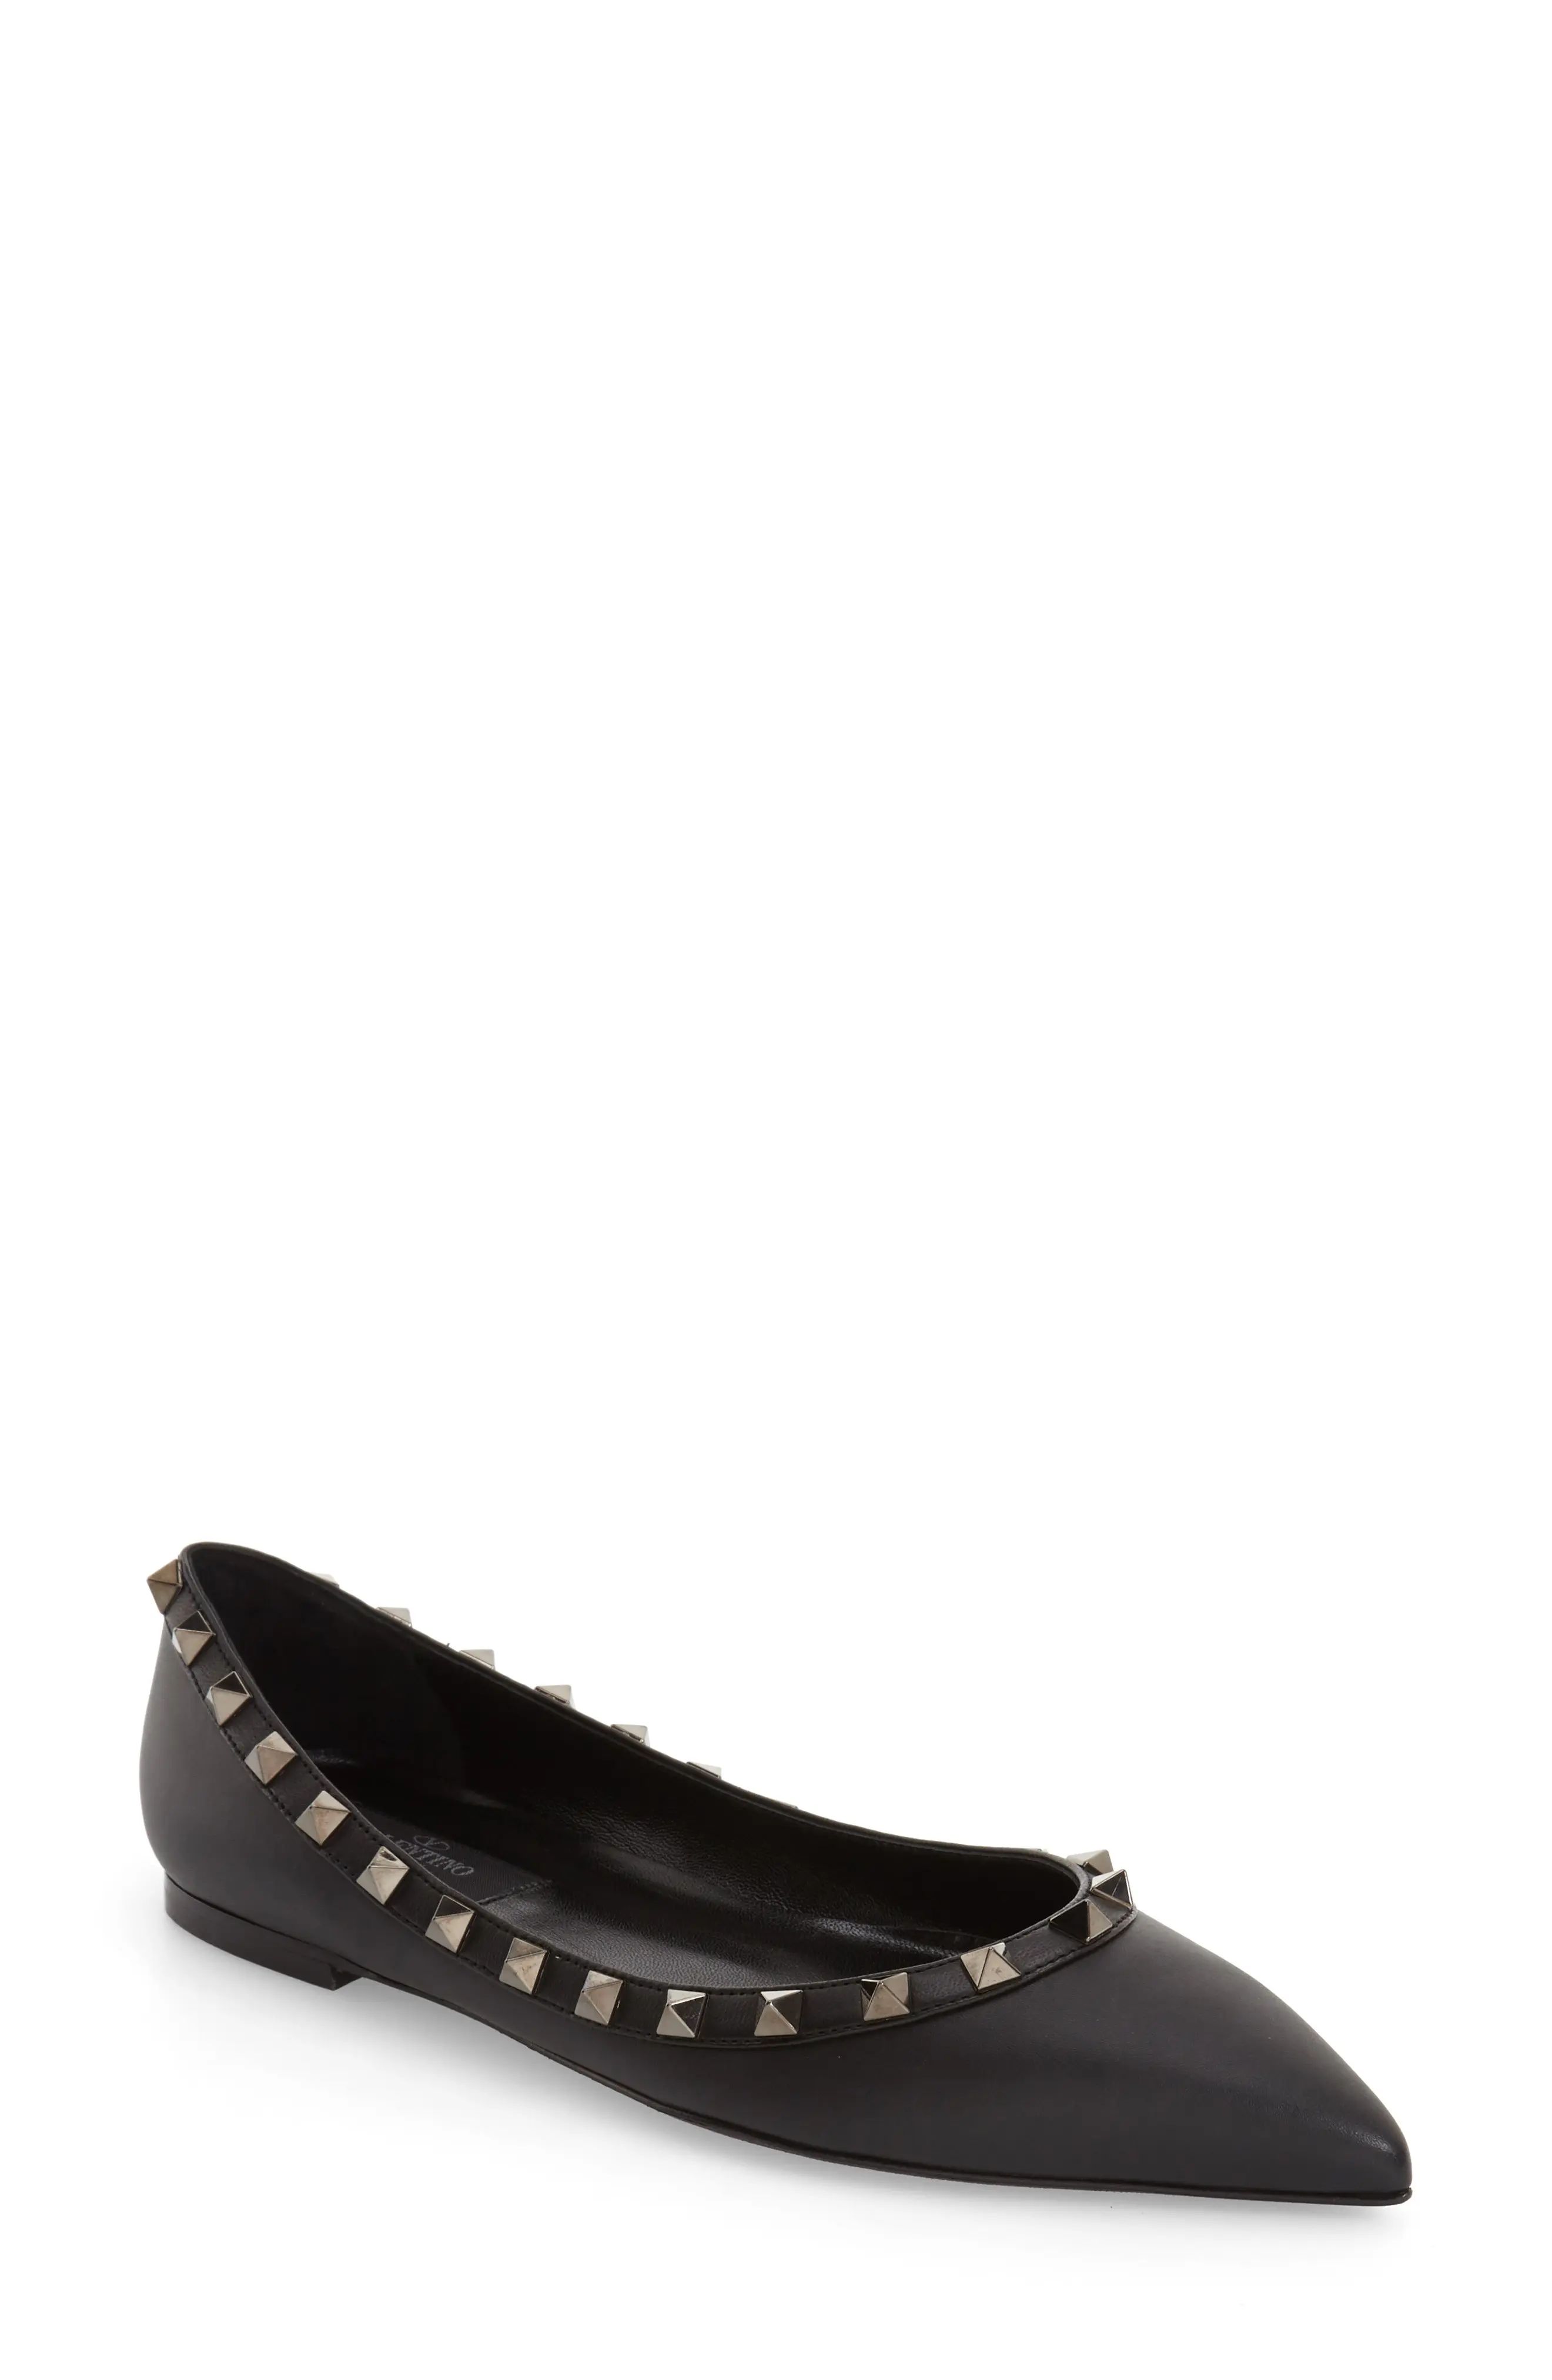 Women's Valentino Garavani Rockstud Pointed Toe Flat, Size 9.5US - Black | Nordstrom